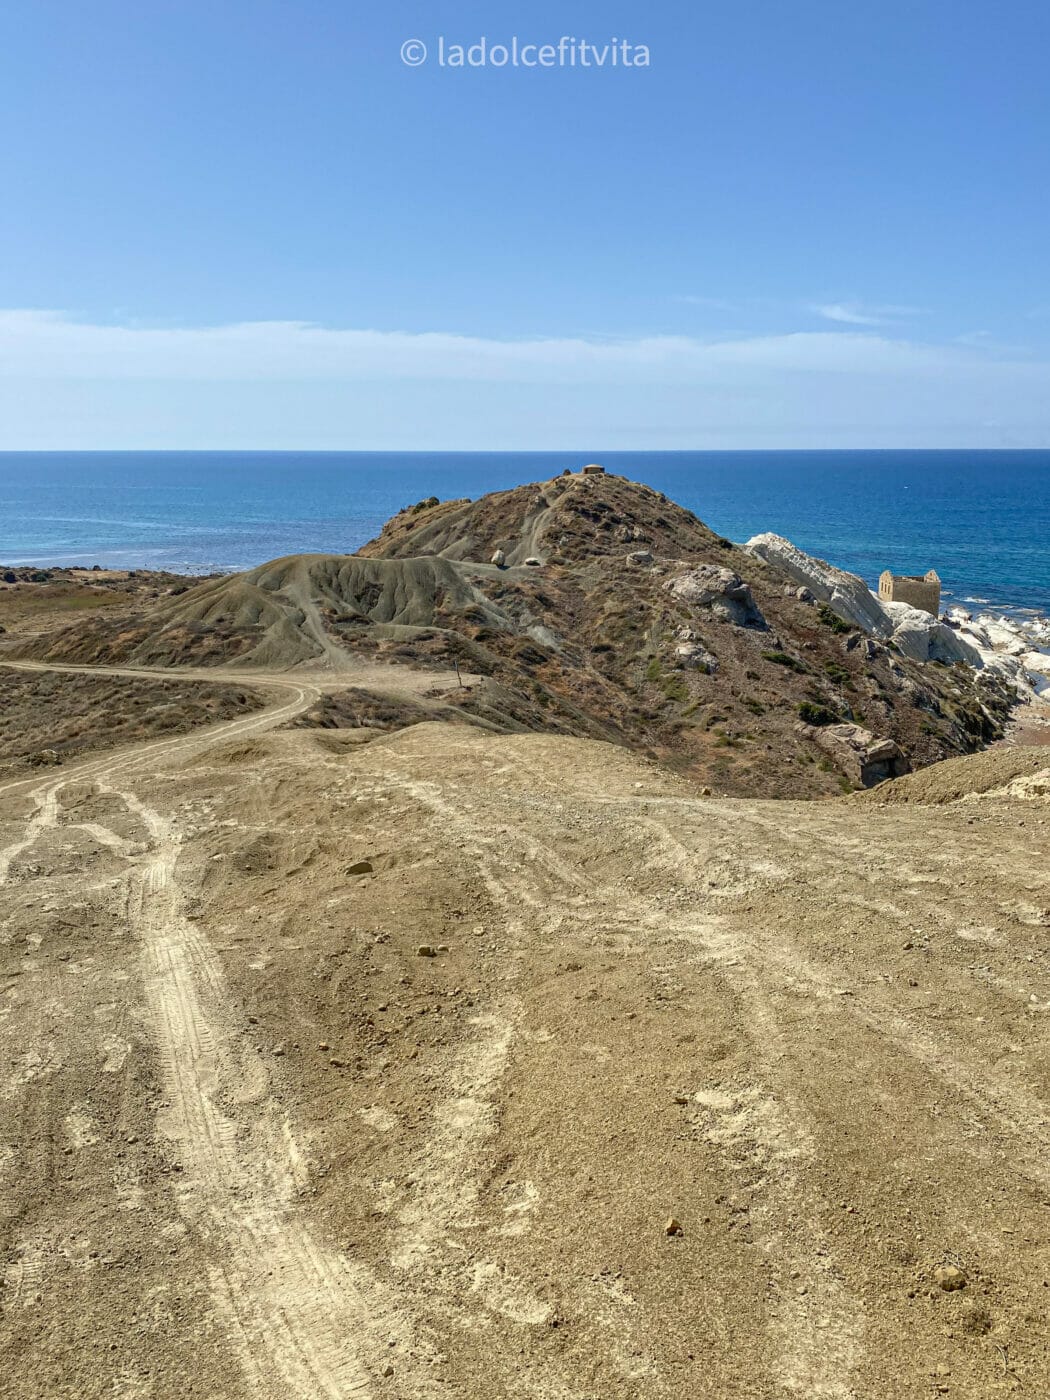 dirt-tracks on a cliffside road skirting the ocean